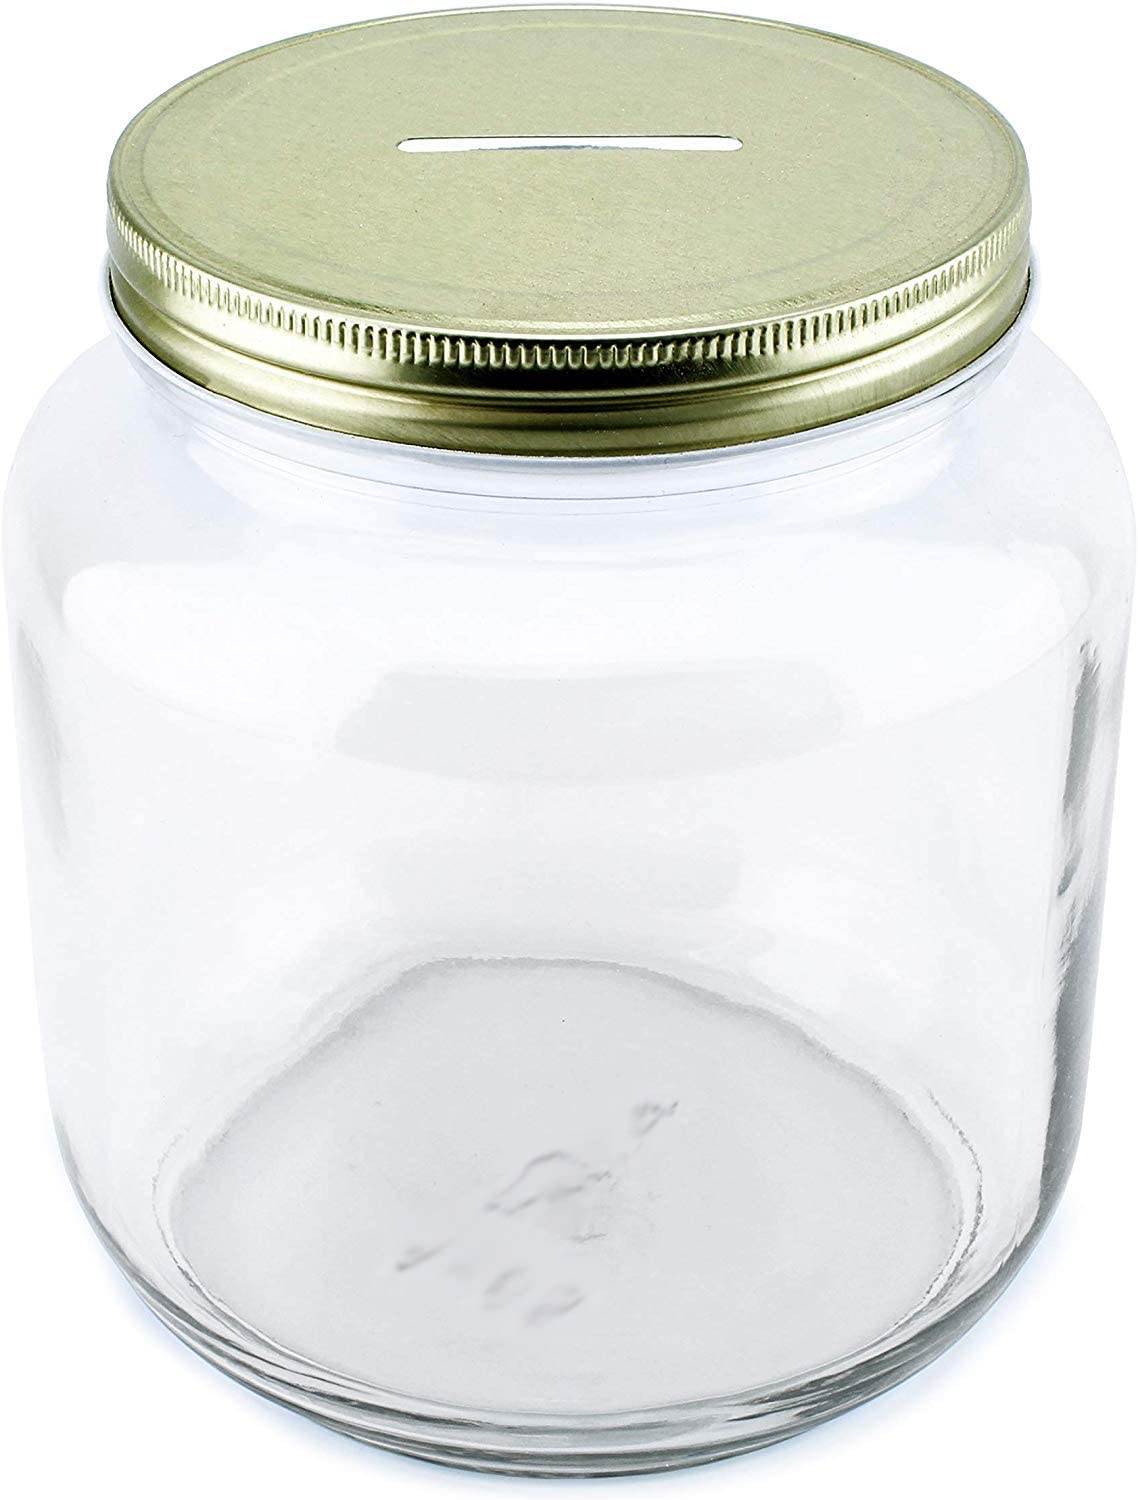 Large Glass Coin Bank Jar